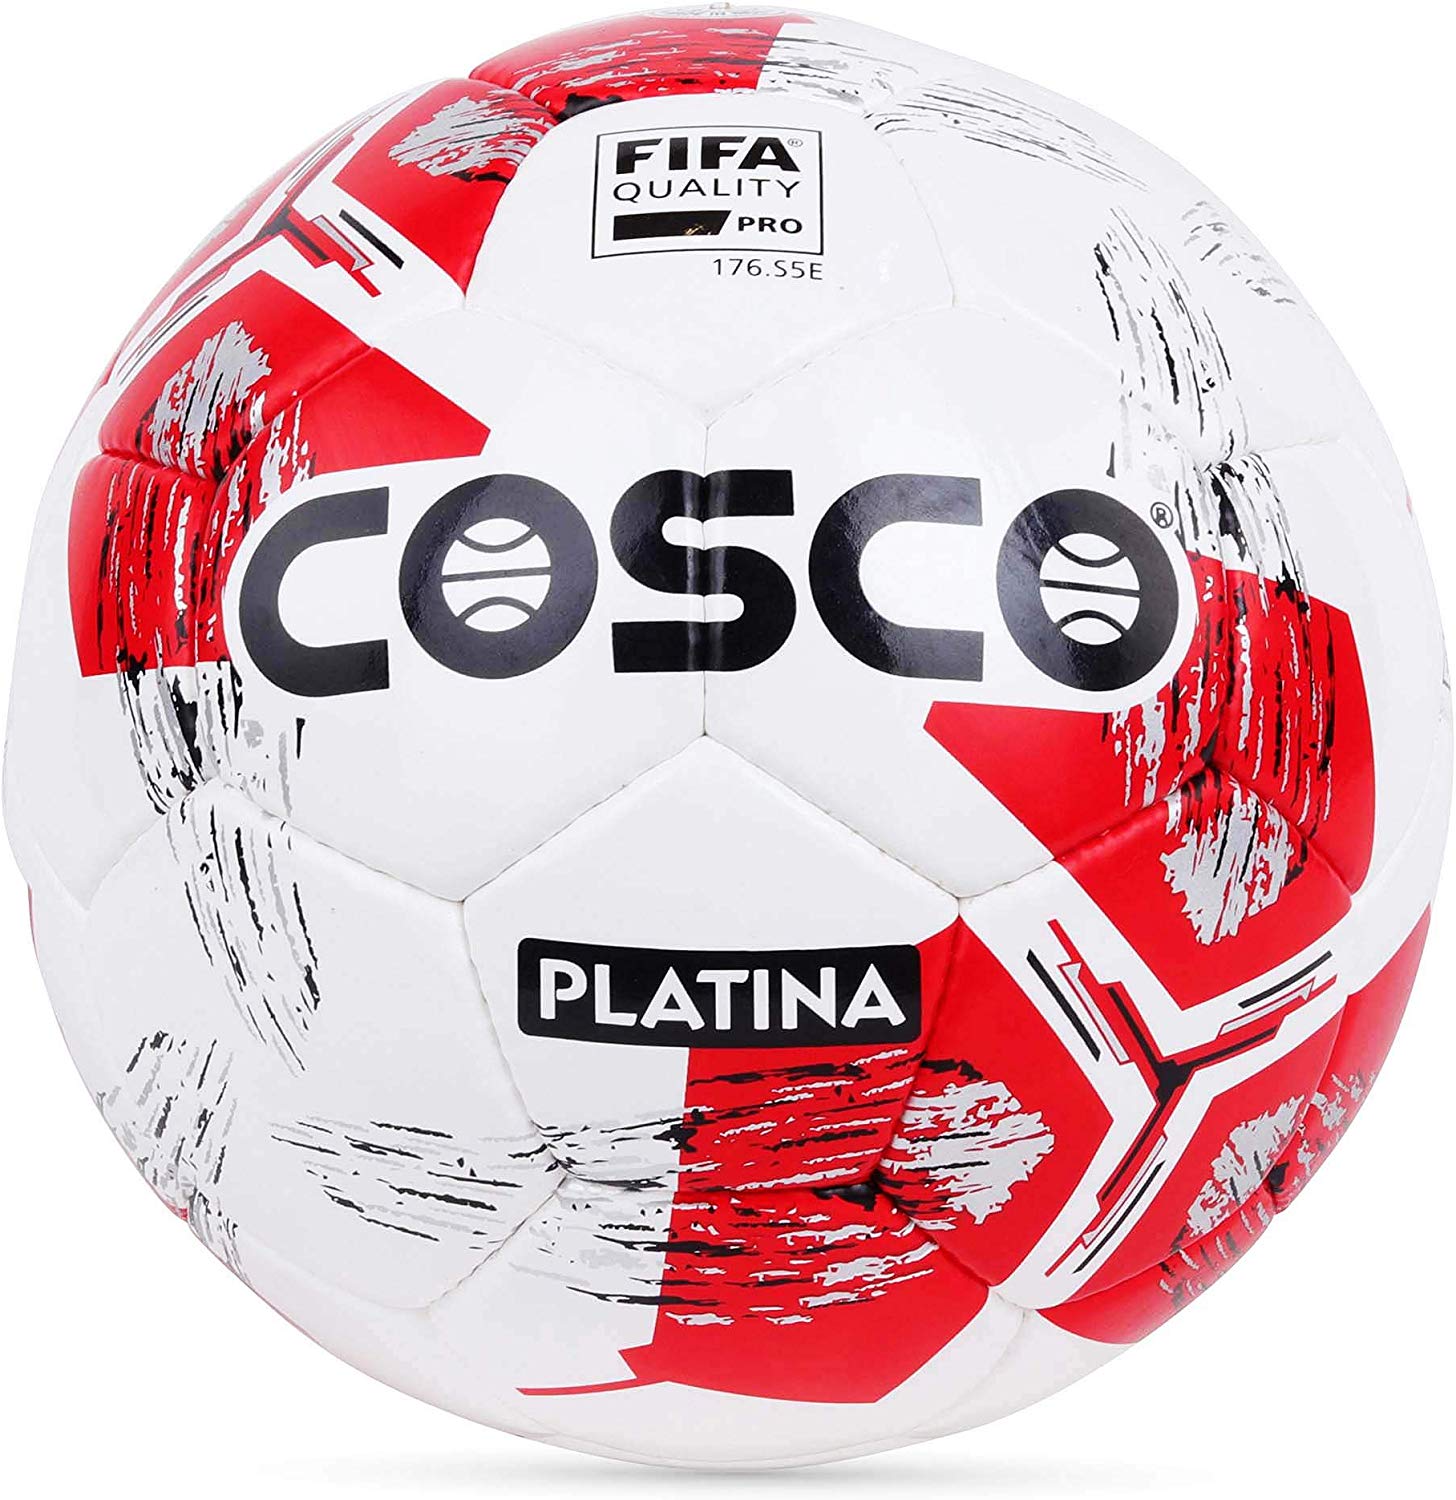 Fifa quality pro. Cosco мяч. Мяч FIFA quality Pro. Мячи с сертификатами FIFA quality. Мяч ФИФА quality Pro 2018 Russia adidas.